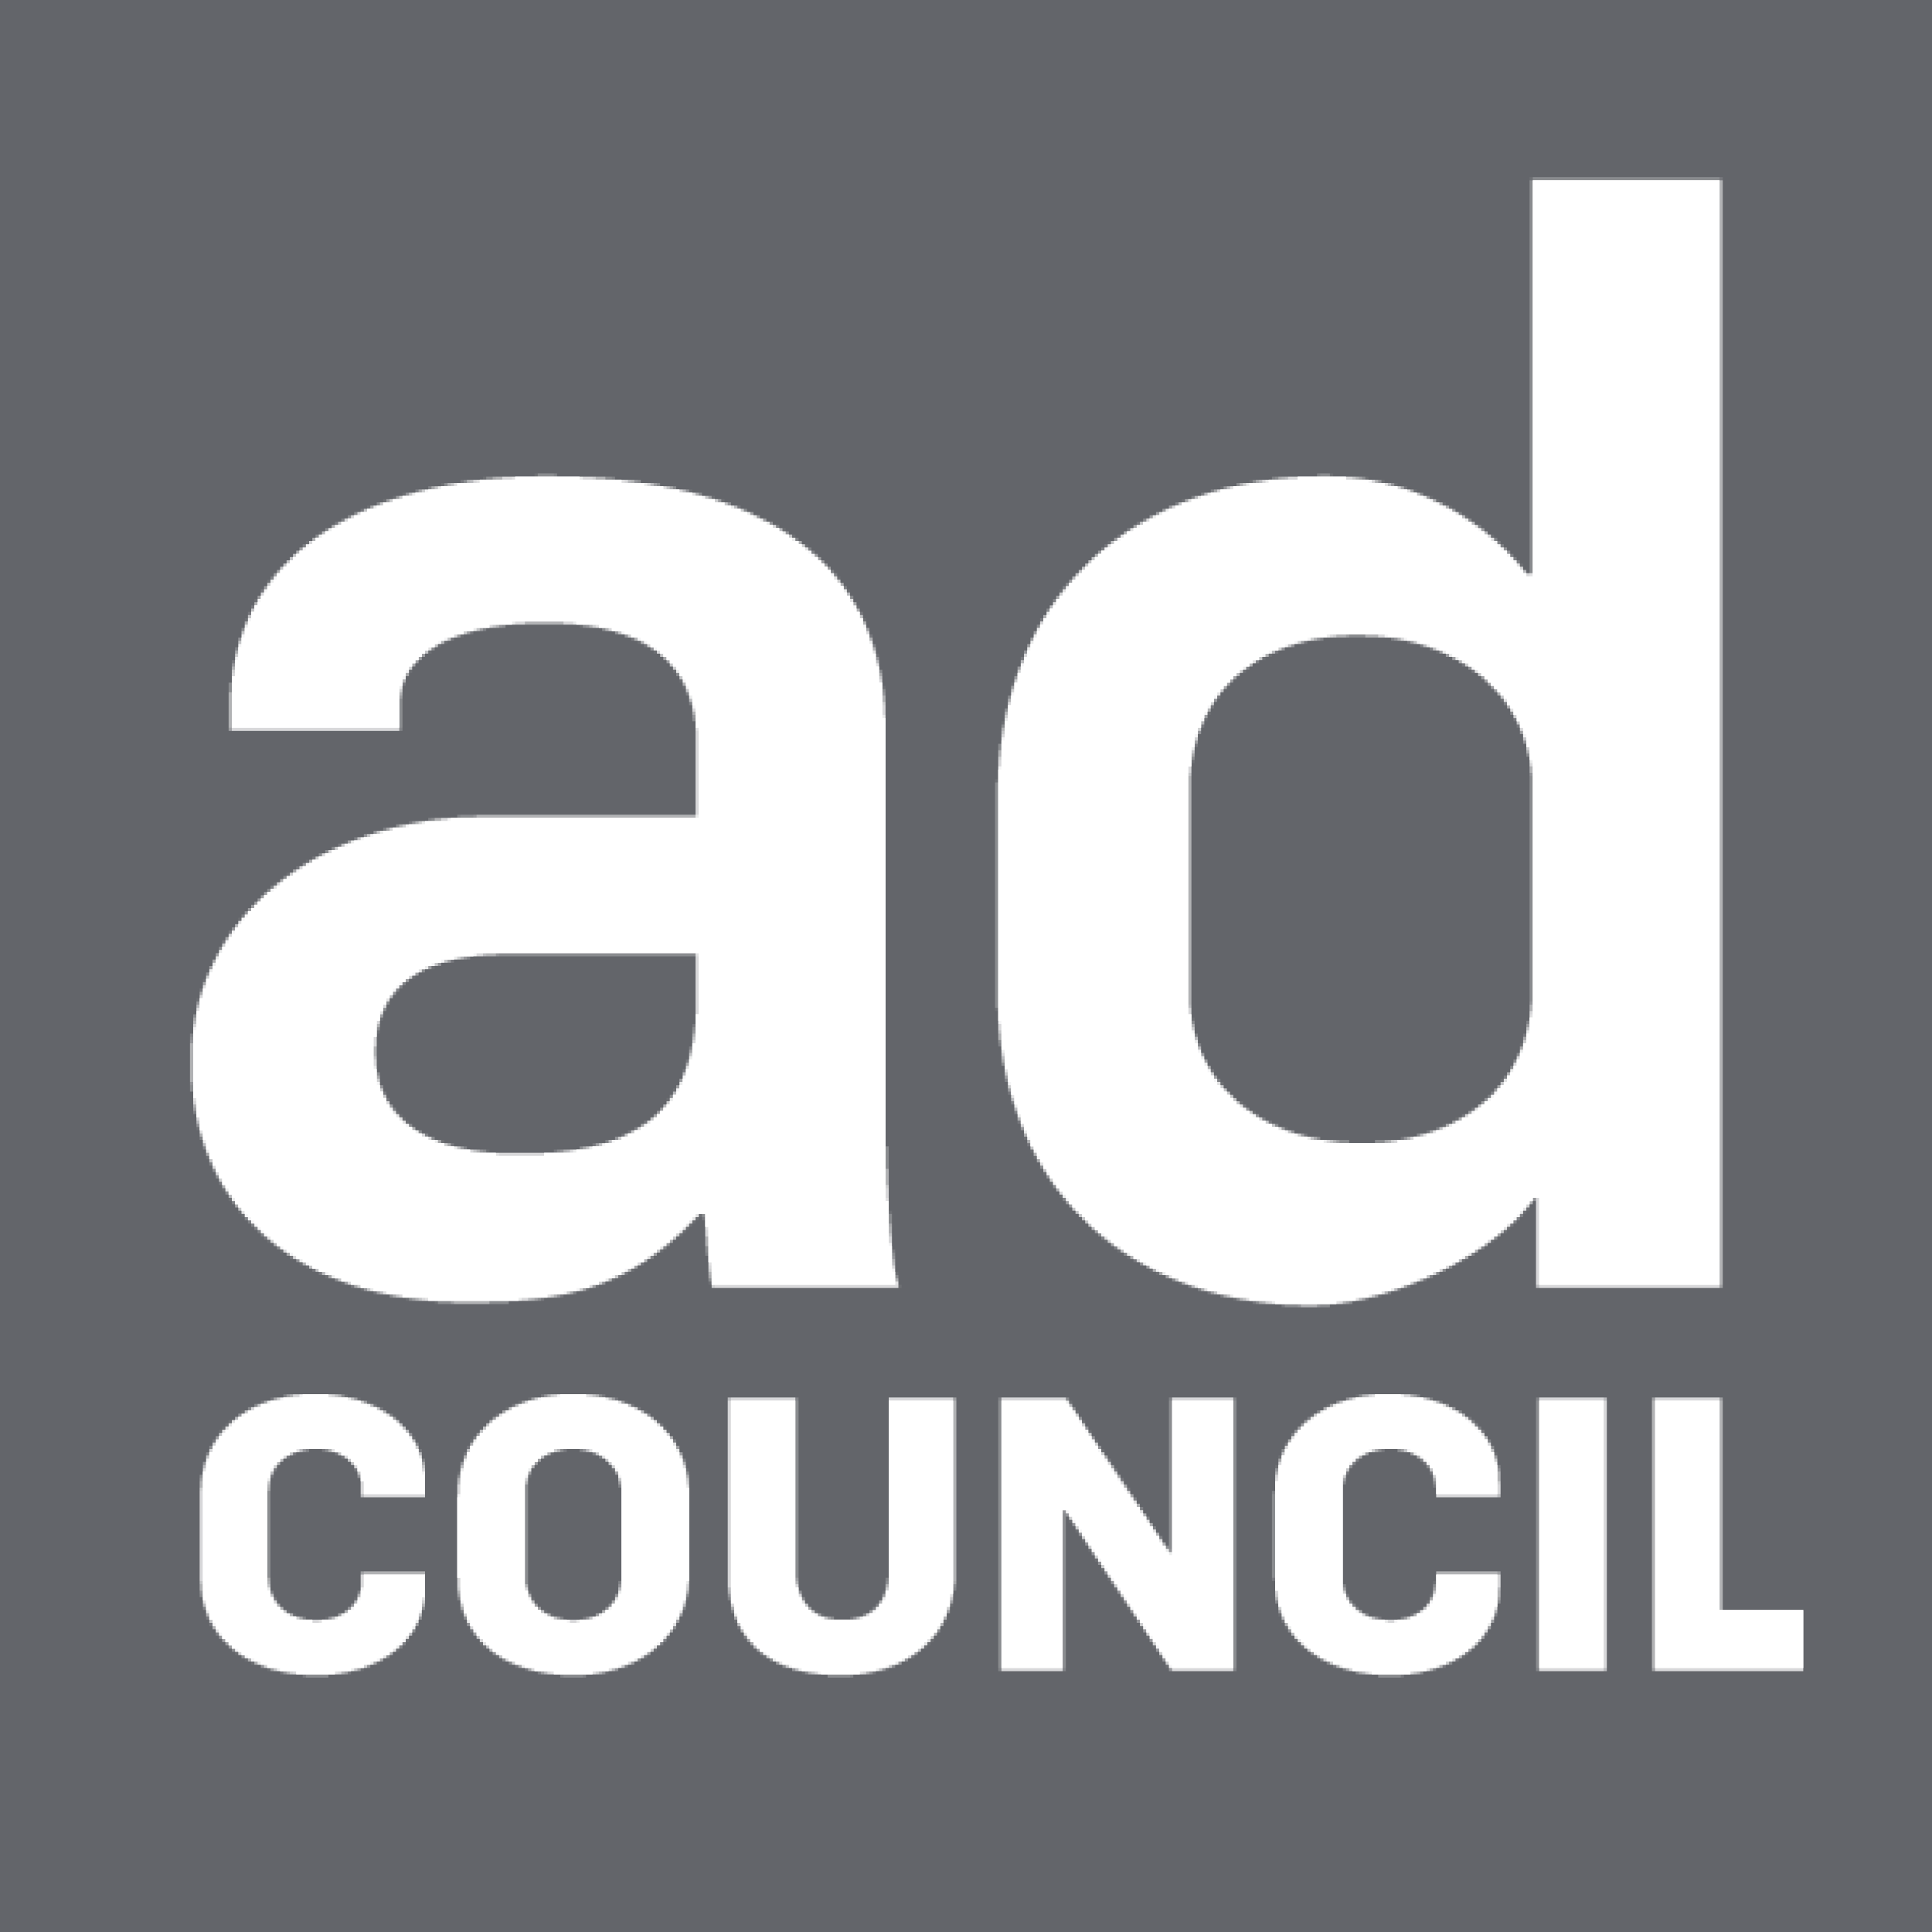 Ad Council